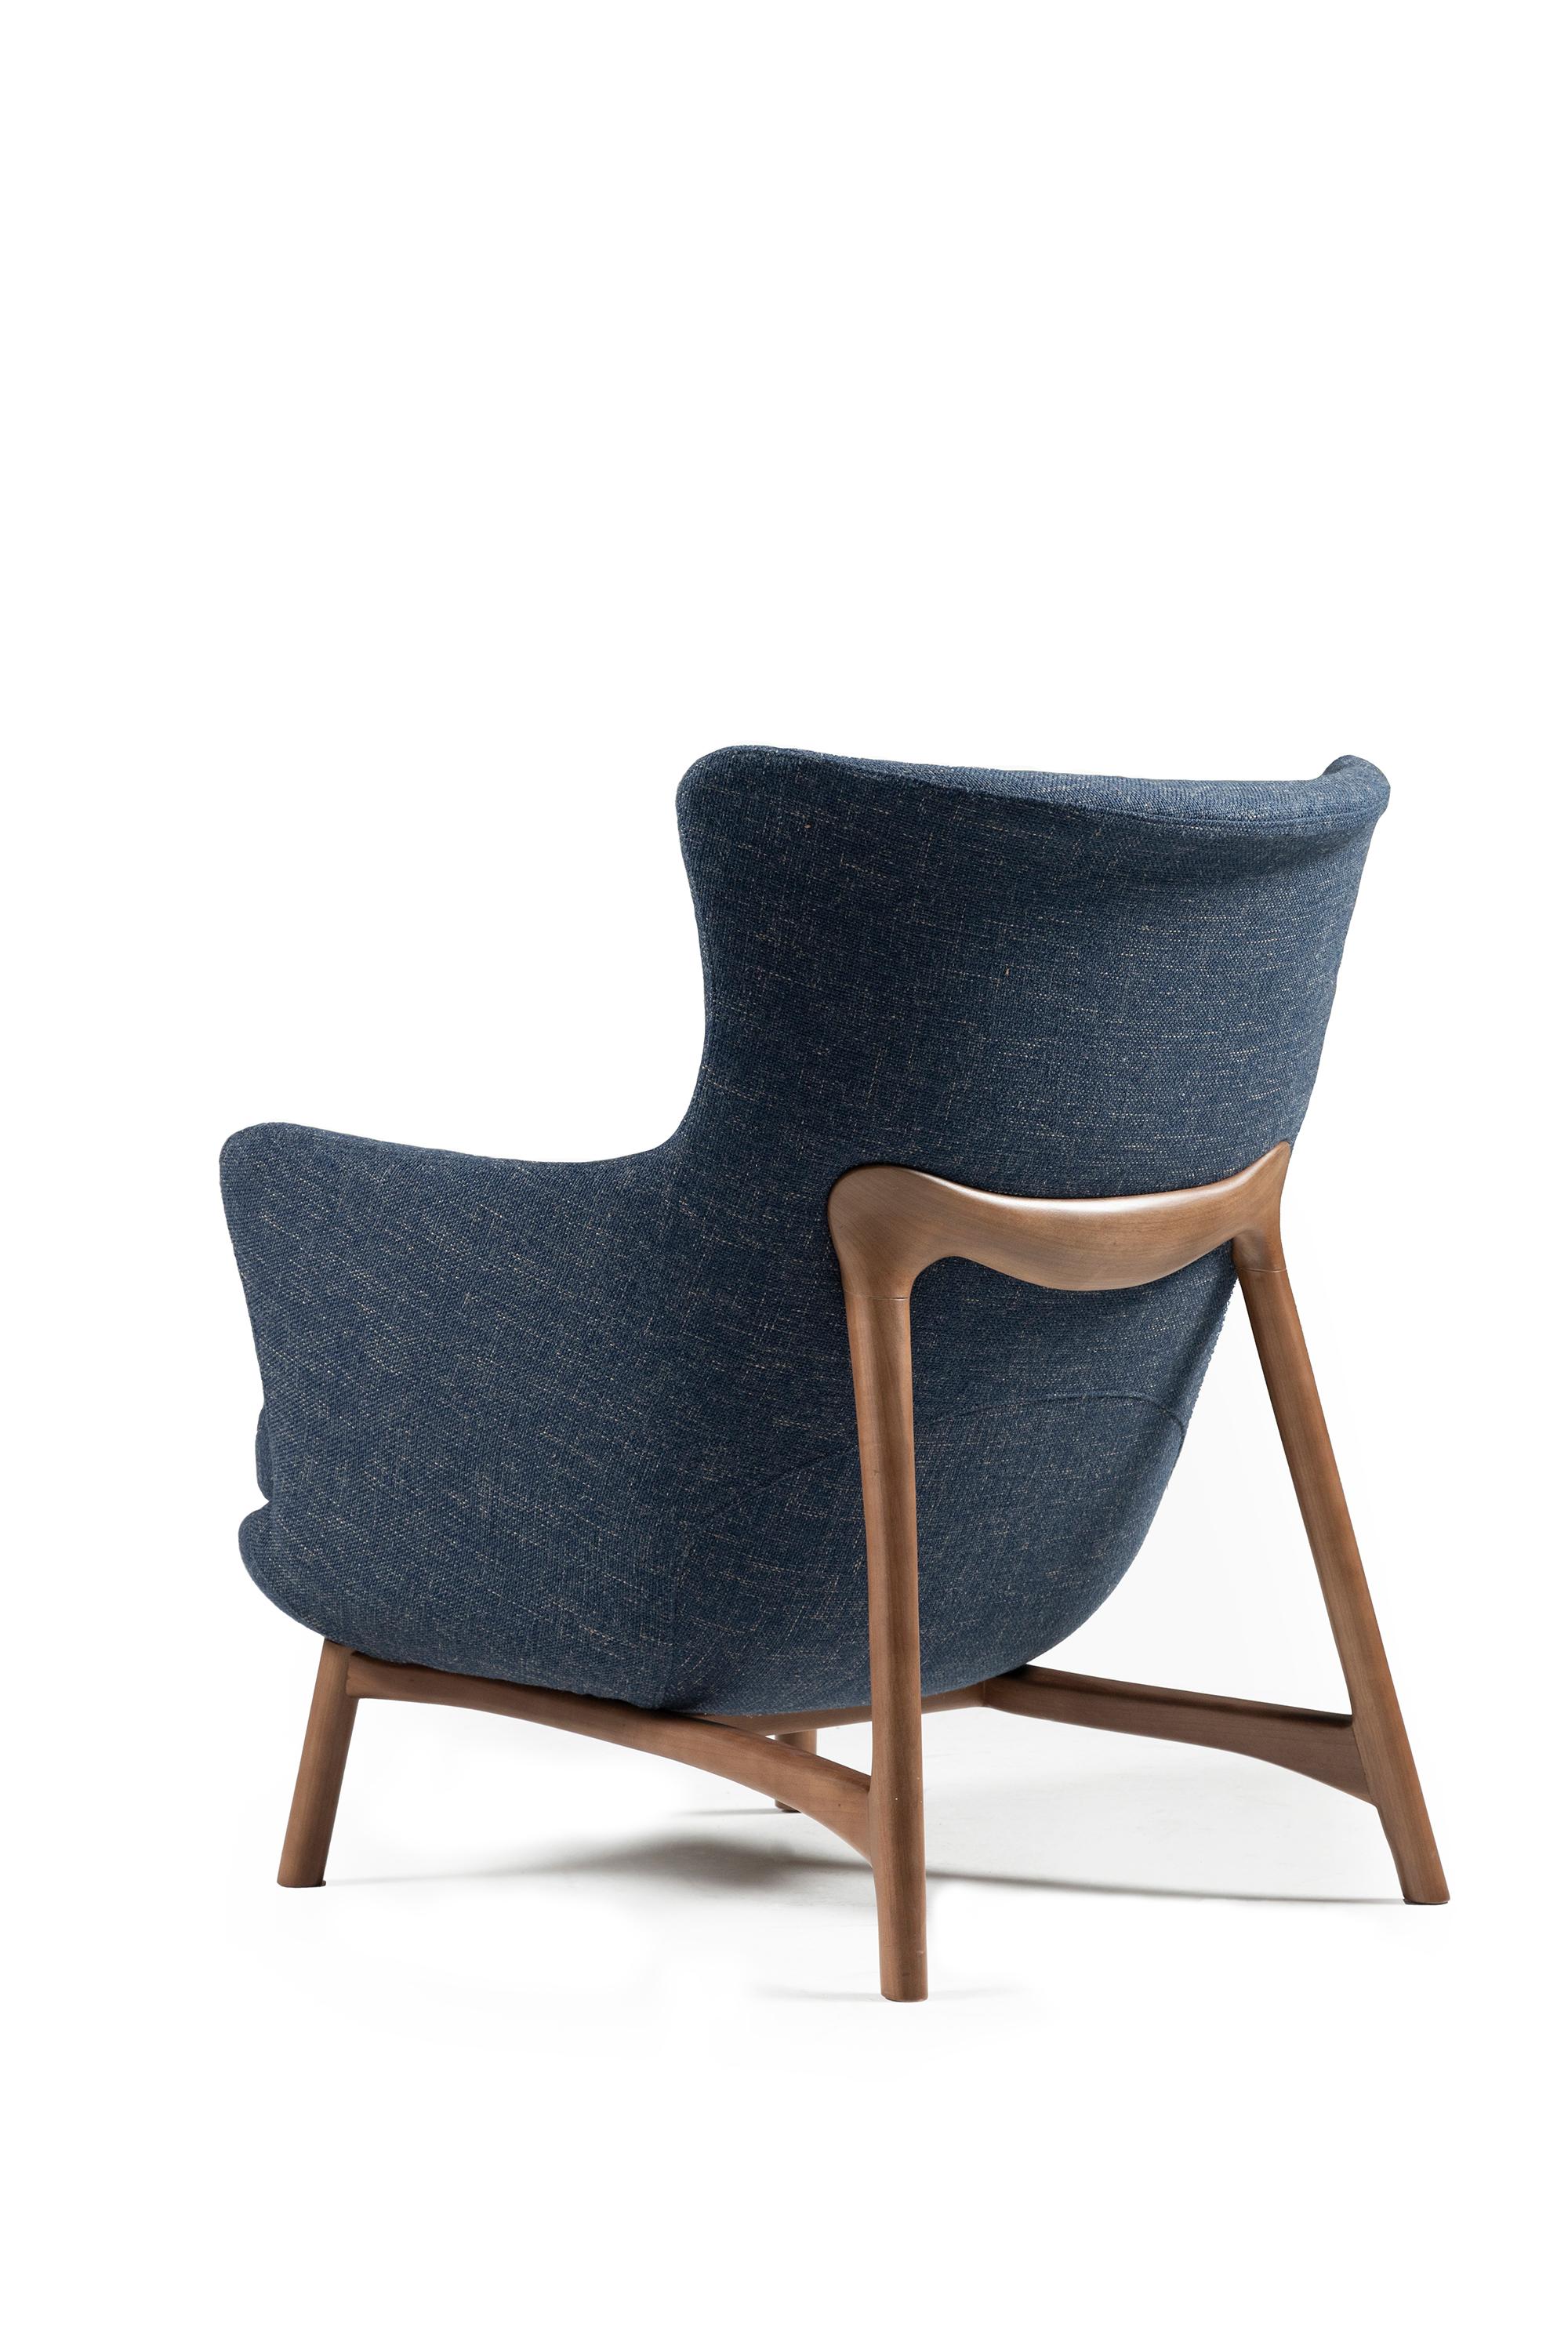 Sublime Sessel, Contemporary Style in Massivholz, Textilien Polsterung.  (Moderne) im Angebot